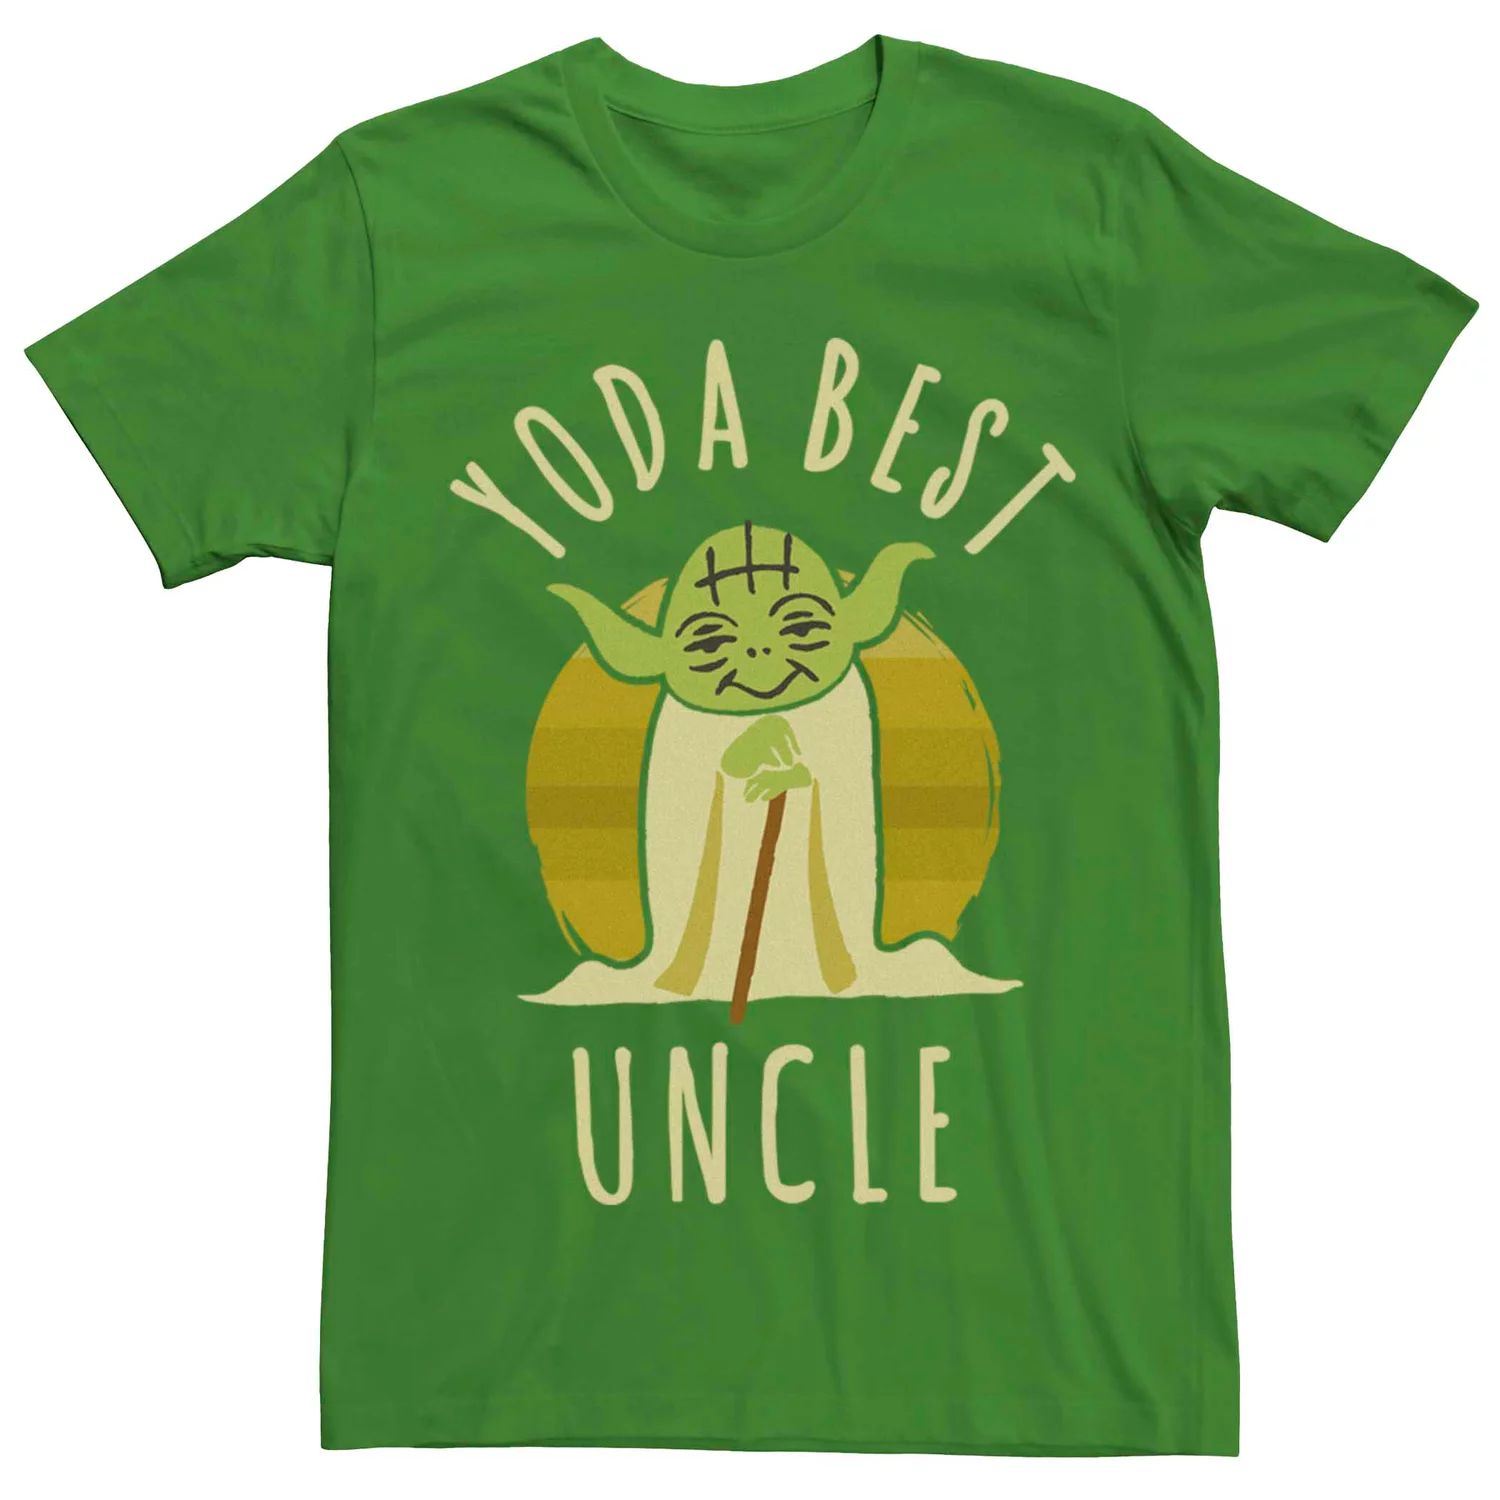 Мужская футболка с рисунком «Звездные войны Yoda Best Uncle Uncle» Licensed Character диск для домашнего планетария uncle milton звездные войны